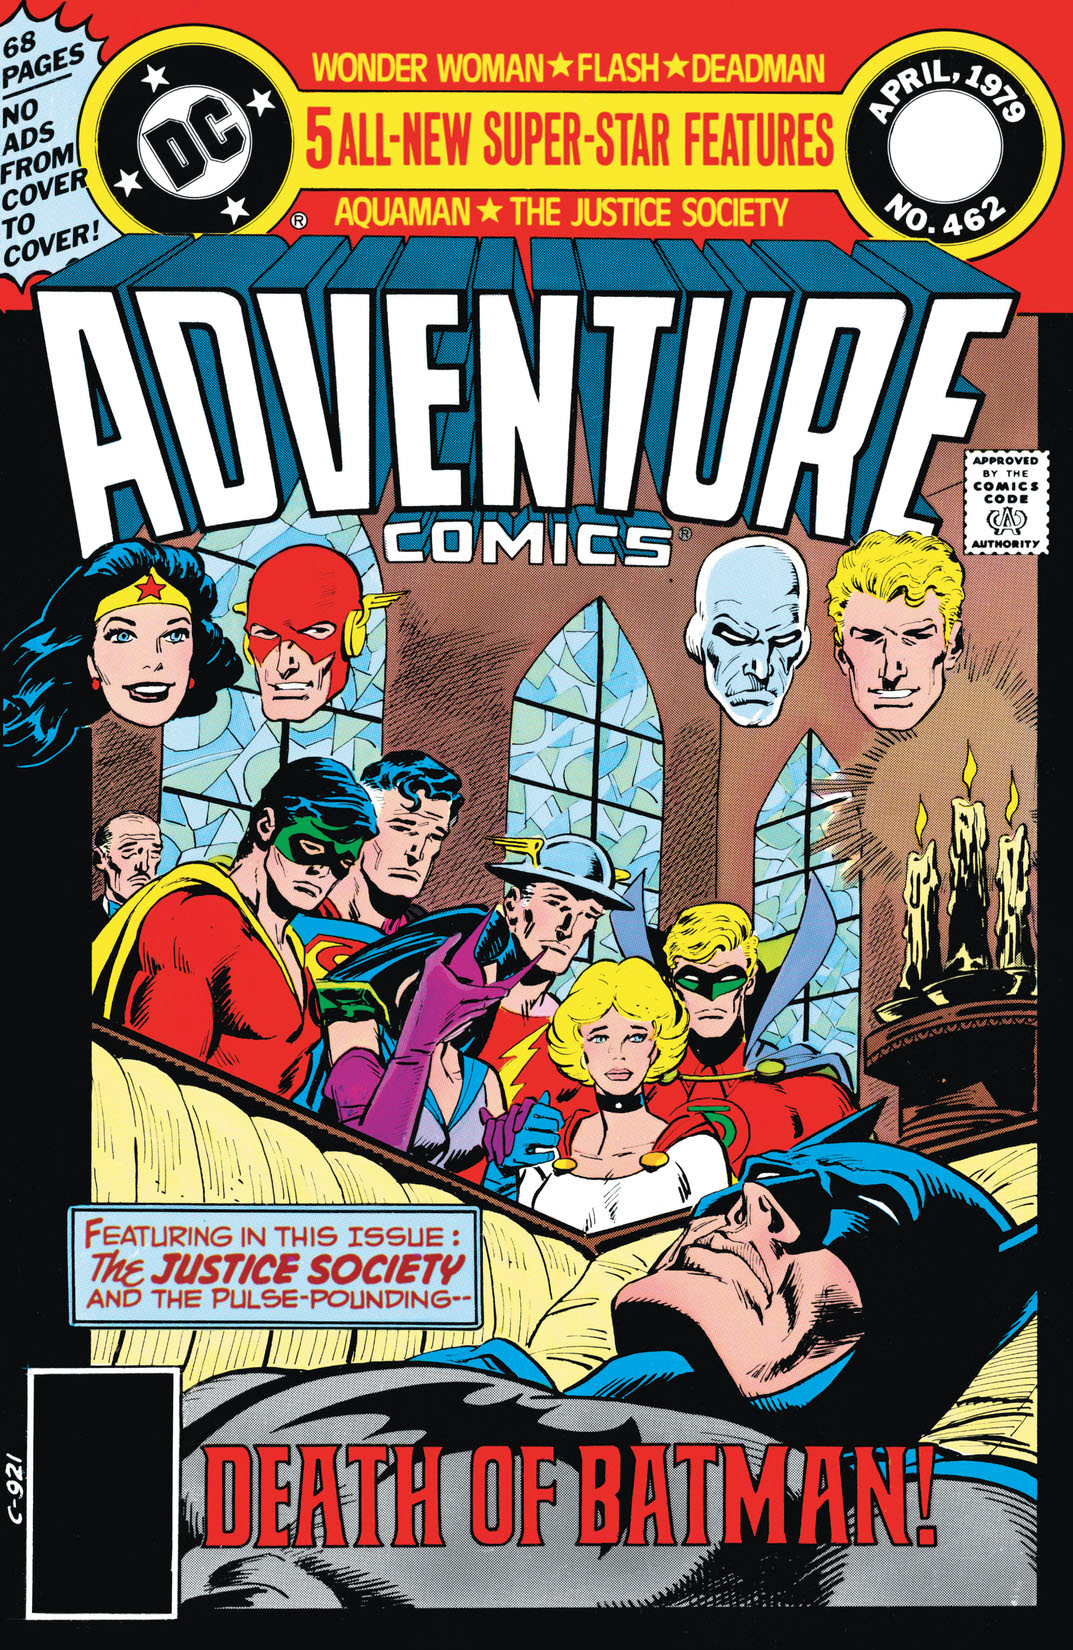 Adventure Comics (1938-) #462 preview images